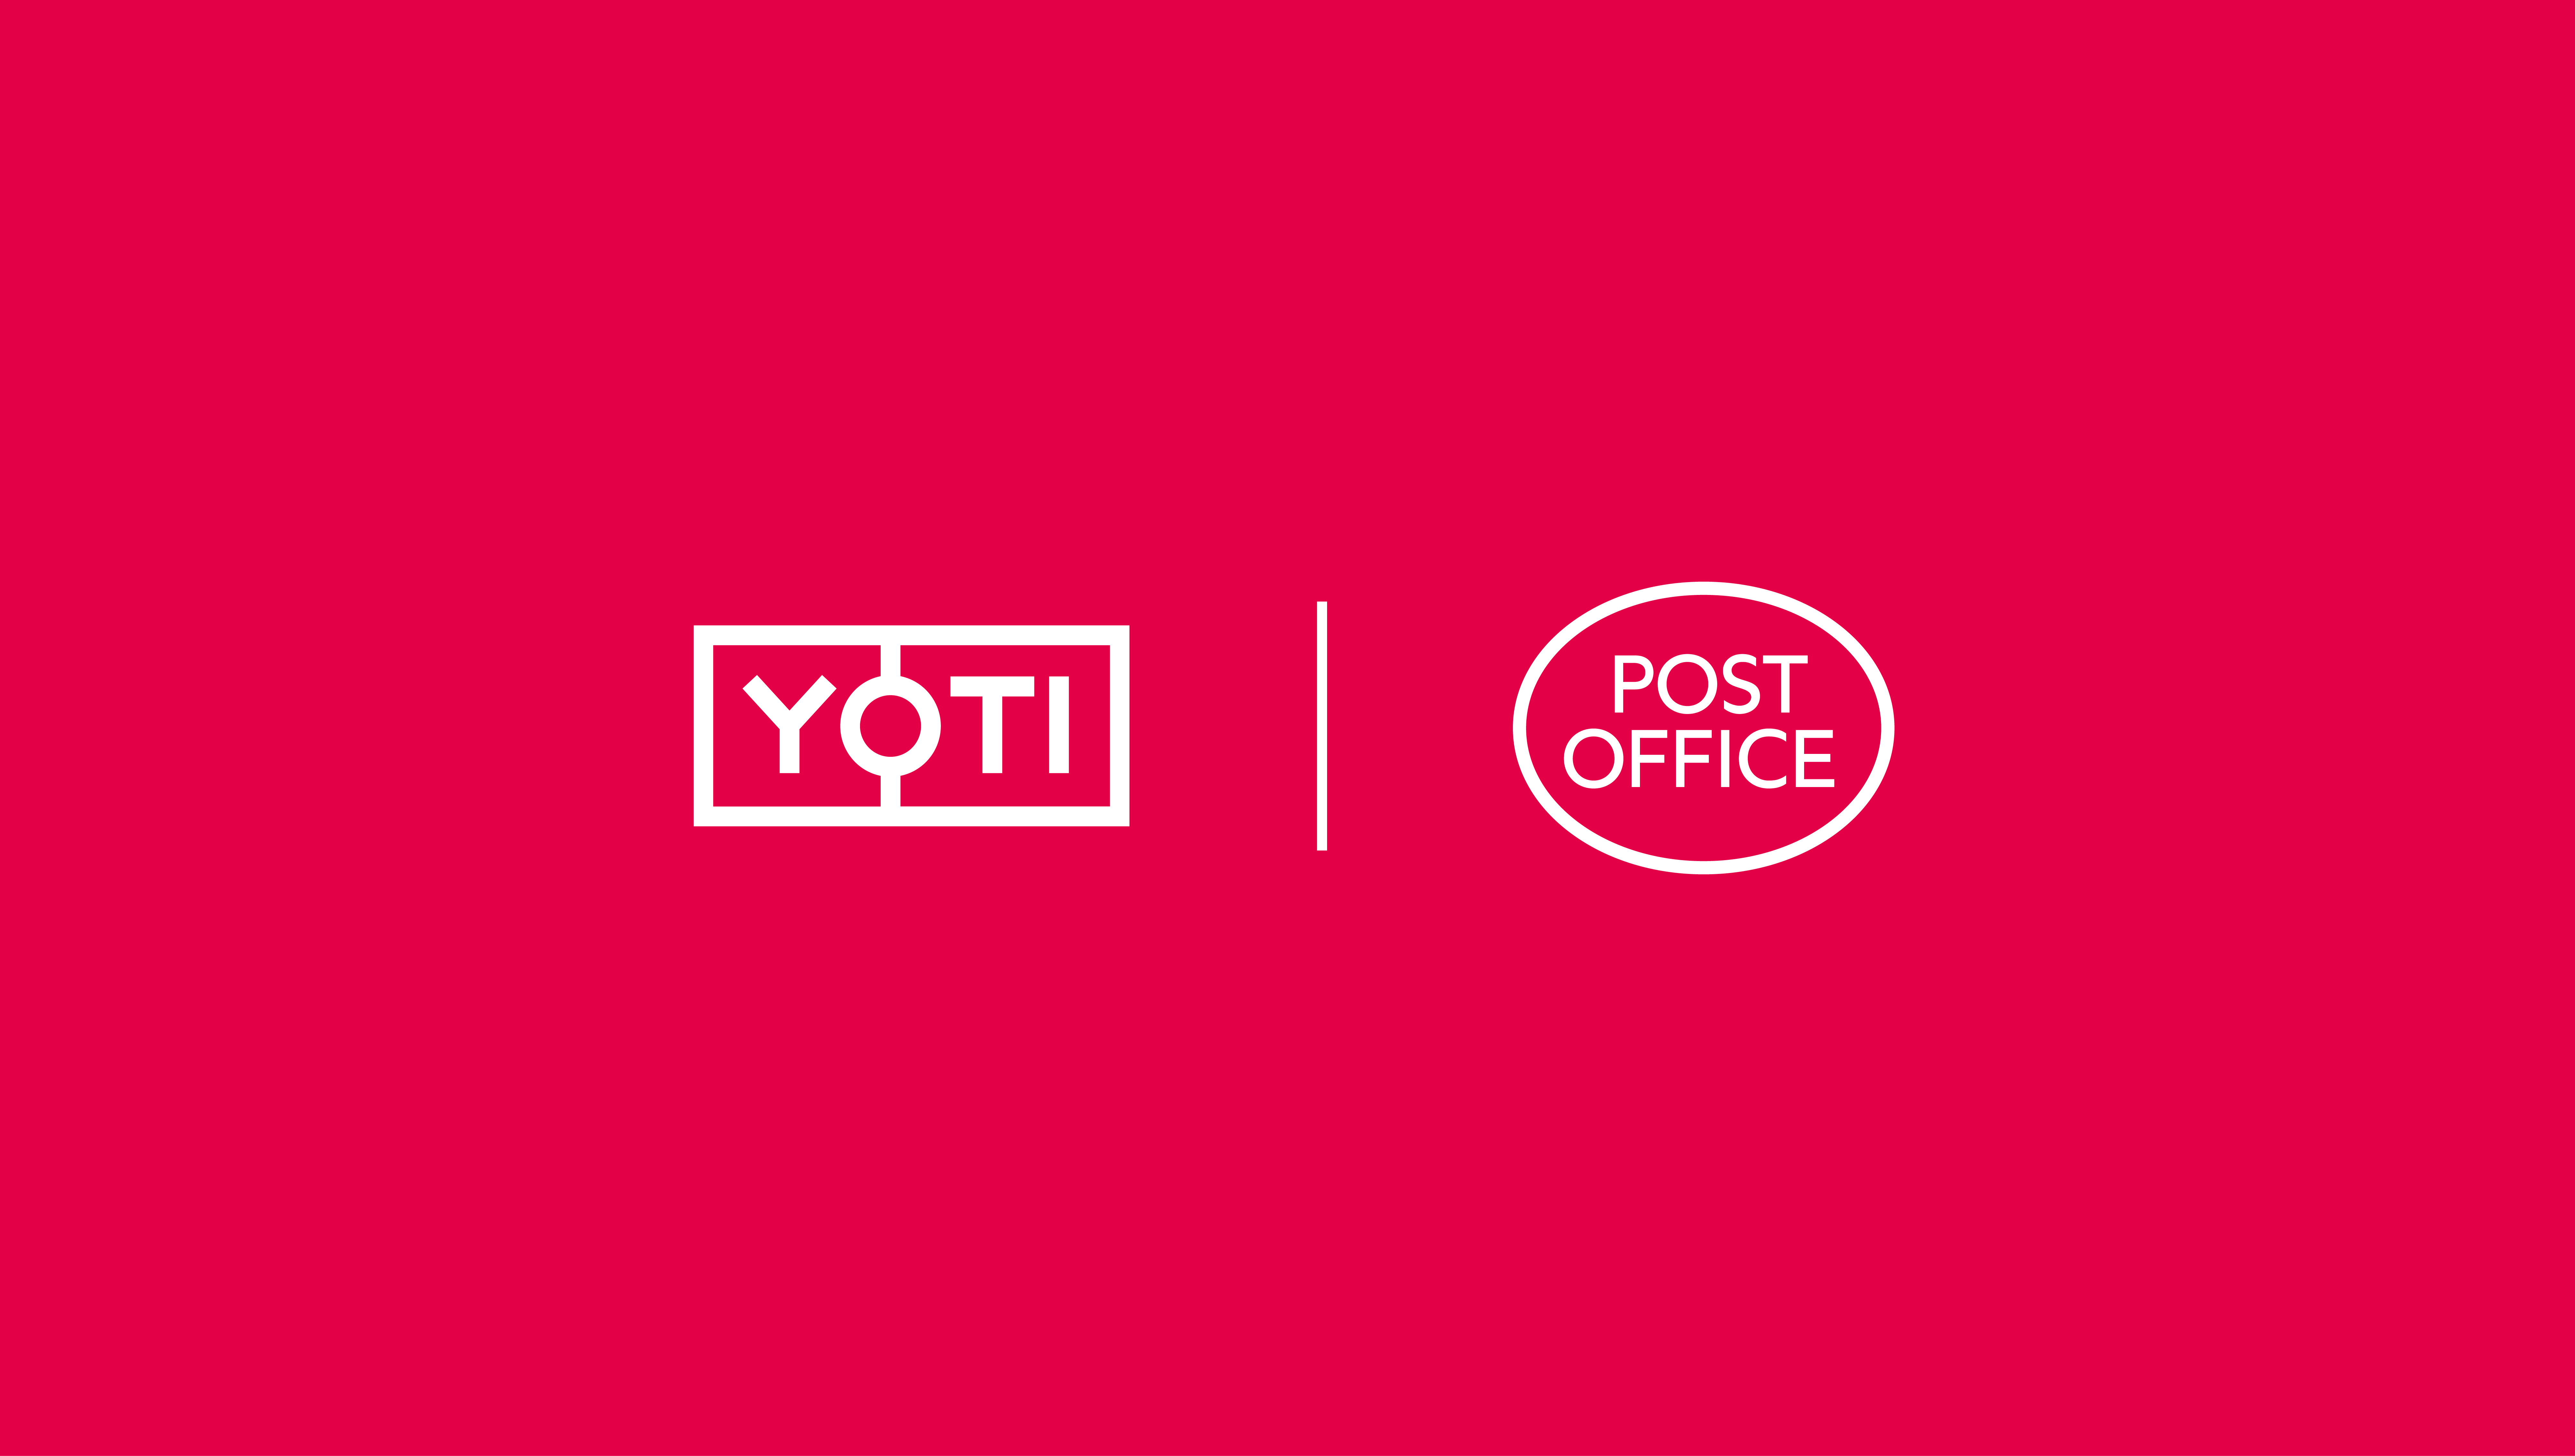 Yoti and PostOffice logos presented together